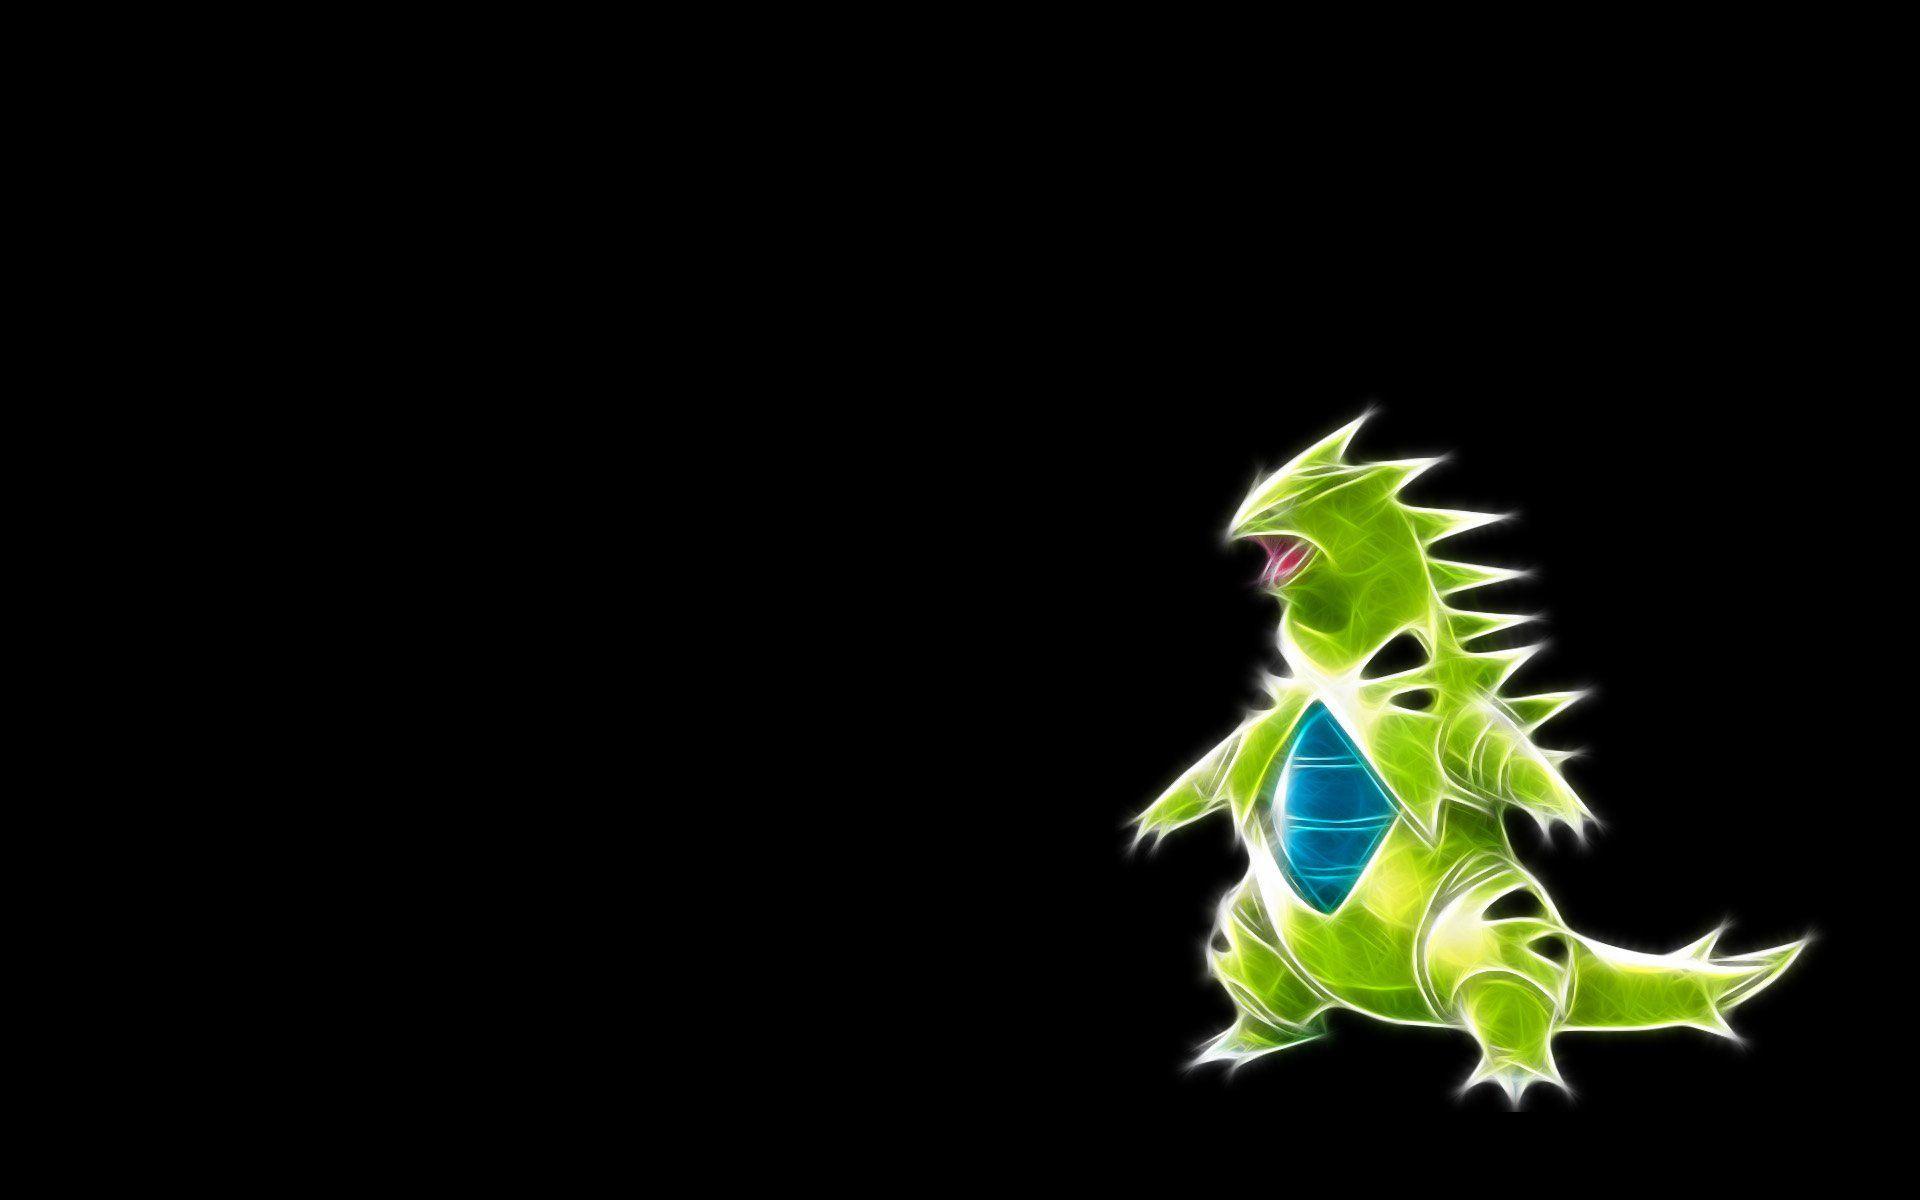 Tyranitar (Pokémon) HD Wallpaper and Background Image